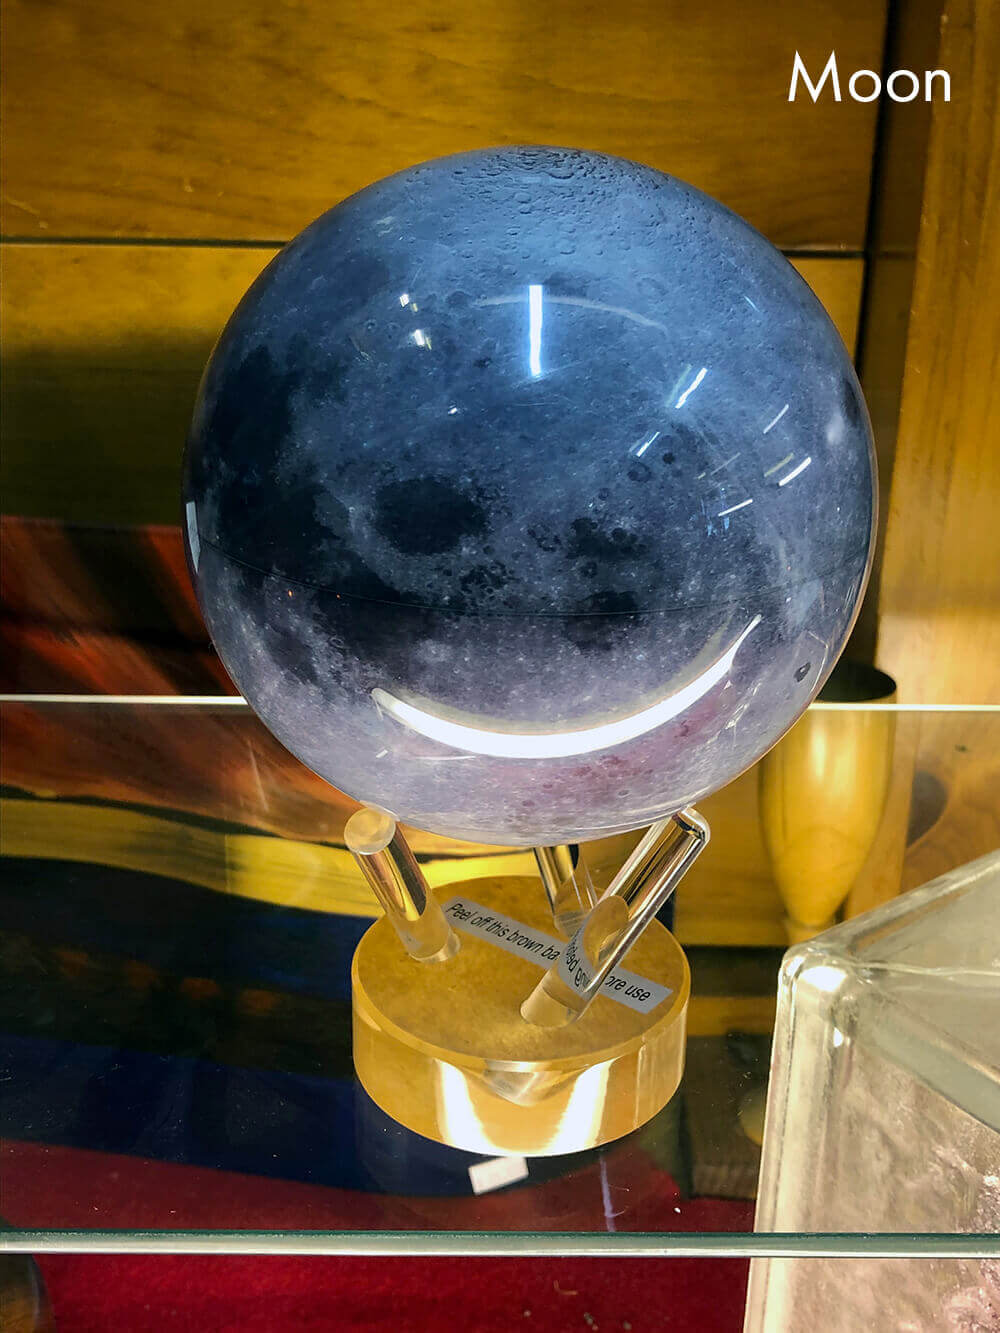 https://cabintreasures.com/wp-content/uploads/2020/11/Mova-Globe-Luna-Moon.jpg